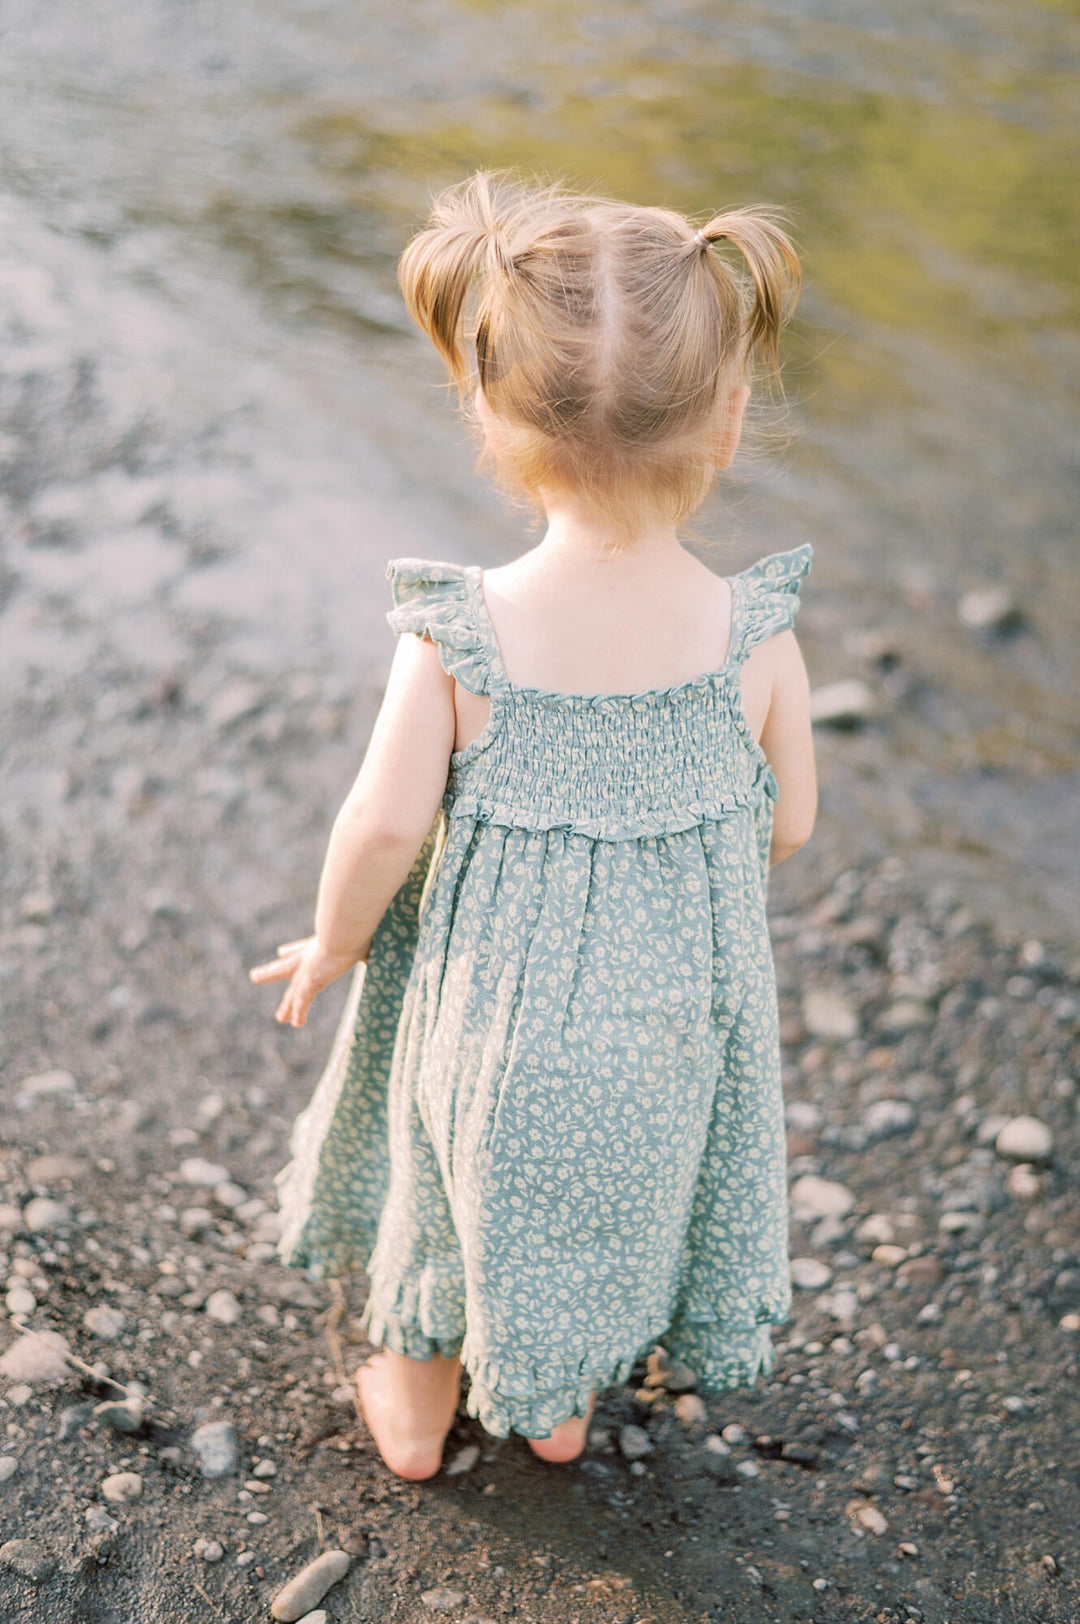 Child wearing Printed Muslin Summer Dress in Sprig Floral